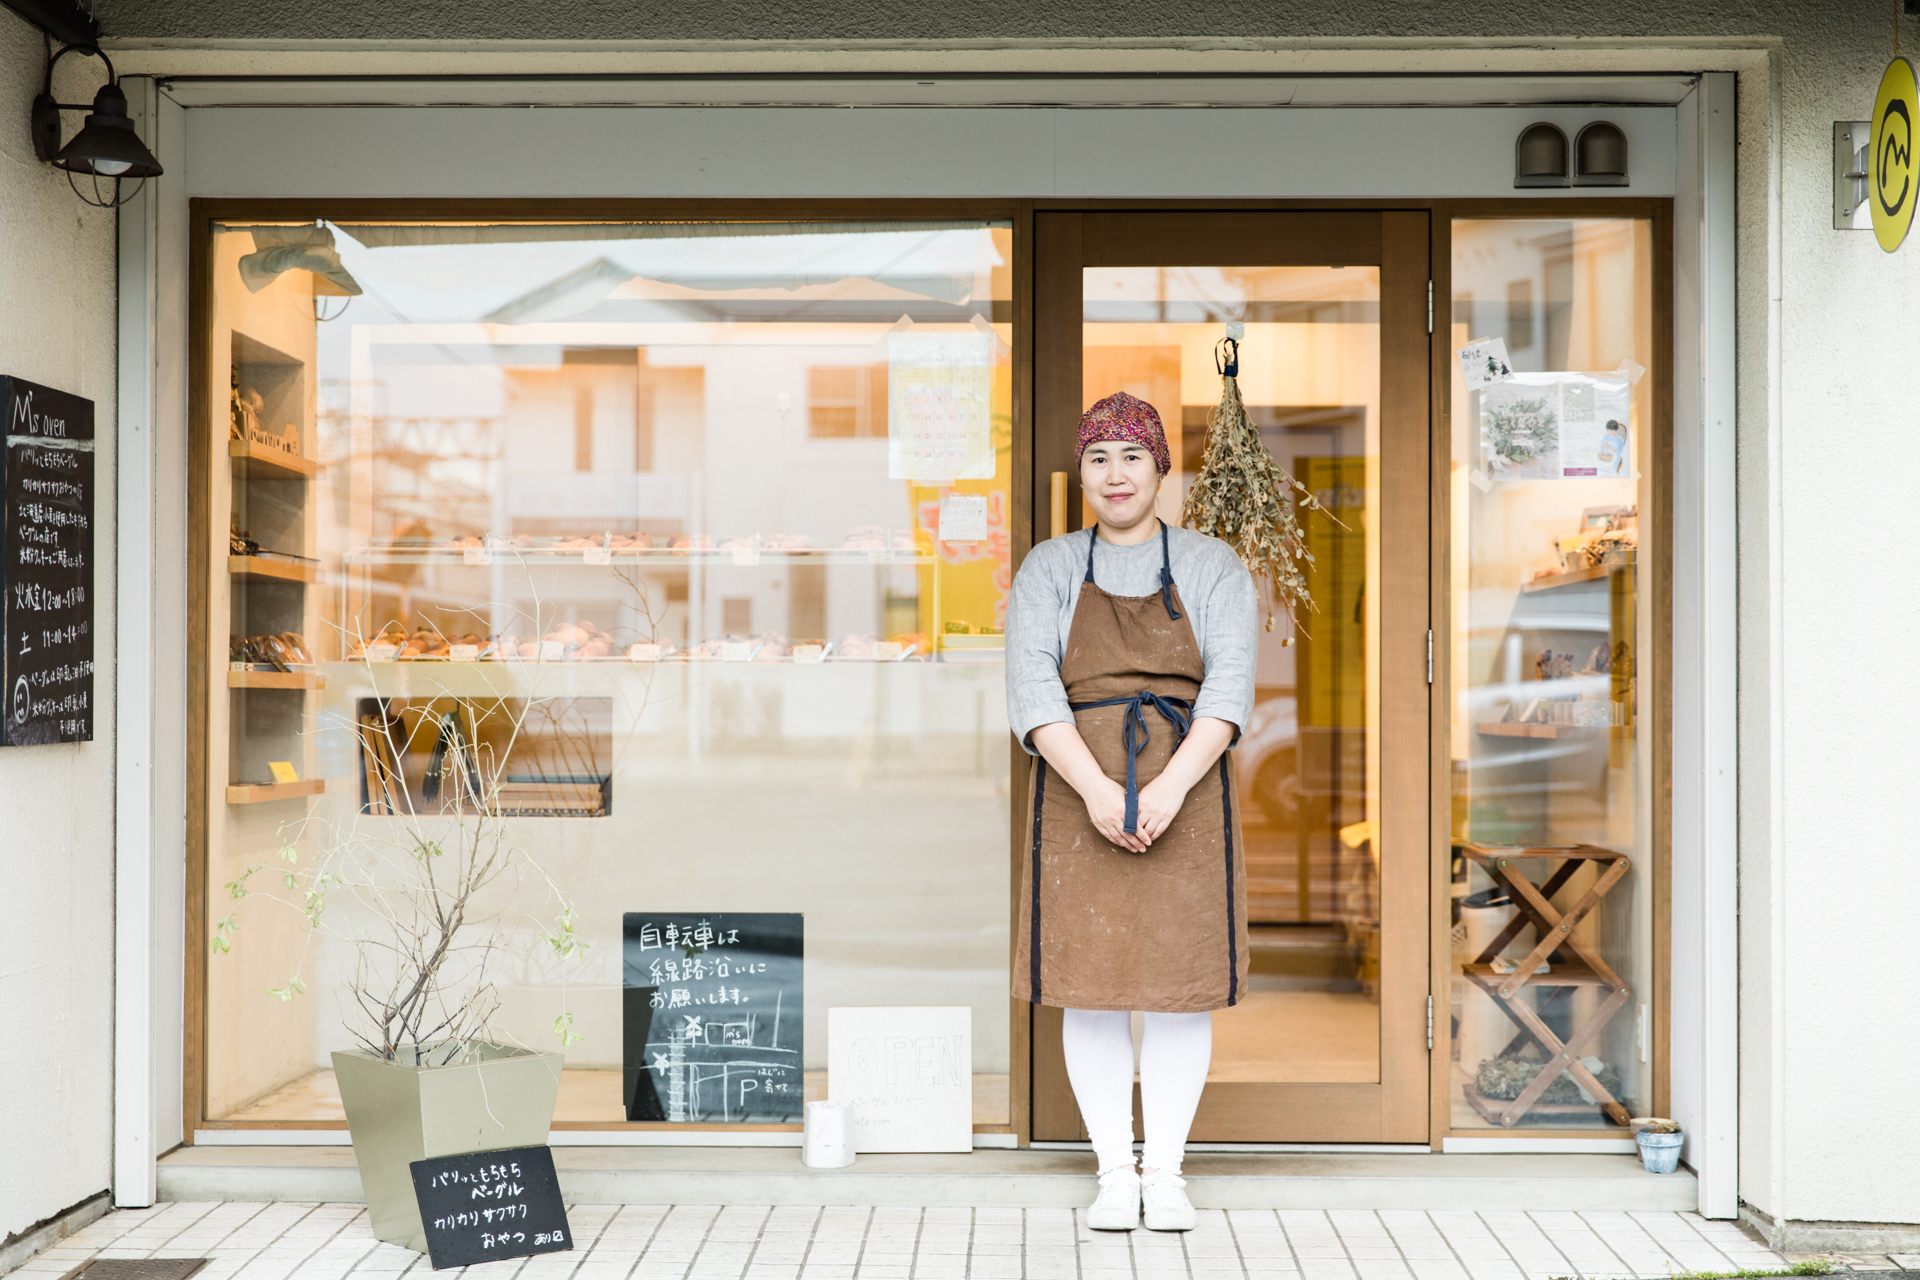 【Hanako w/ Seibu】仕事、子育て、人づきあいを同じ街で。西武柳沢にある人気ベーグル店〈M’s oven〉の地域暮らし。